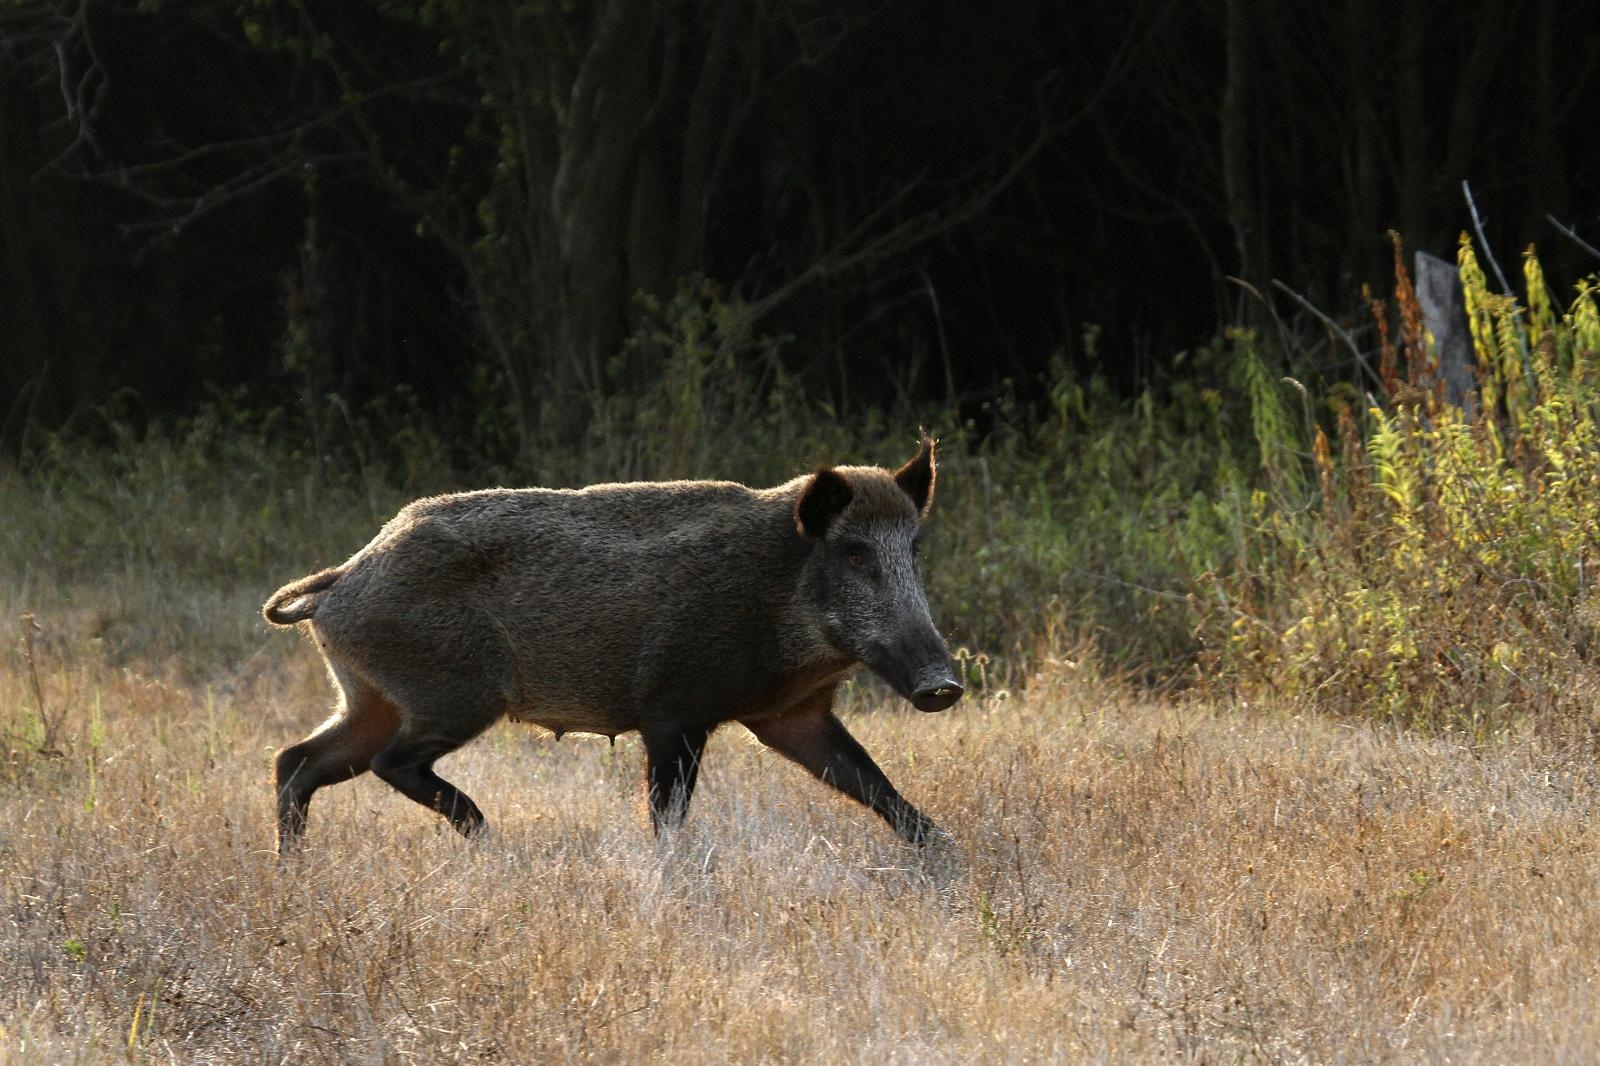 05.09.2012., Park prirode Kopacki rit - Divlje svinje, ilustracija.
Photo: Marko Mrkonjic/PIXSELL